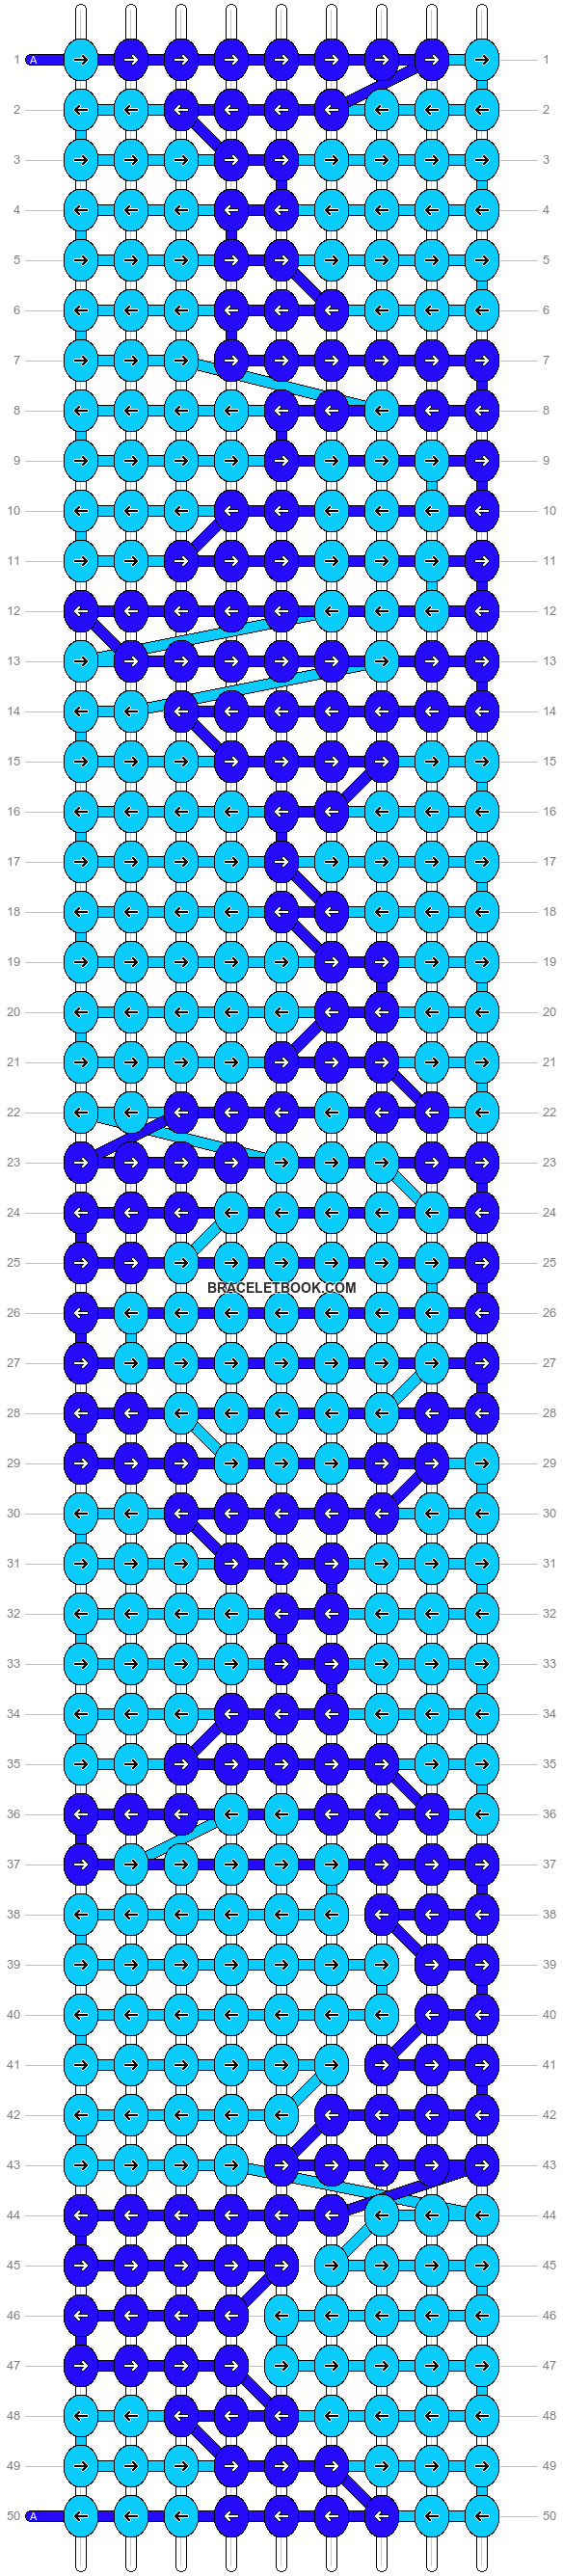 Alpha pattern #51266 variation #115833 pattern